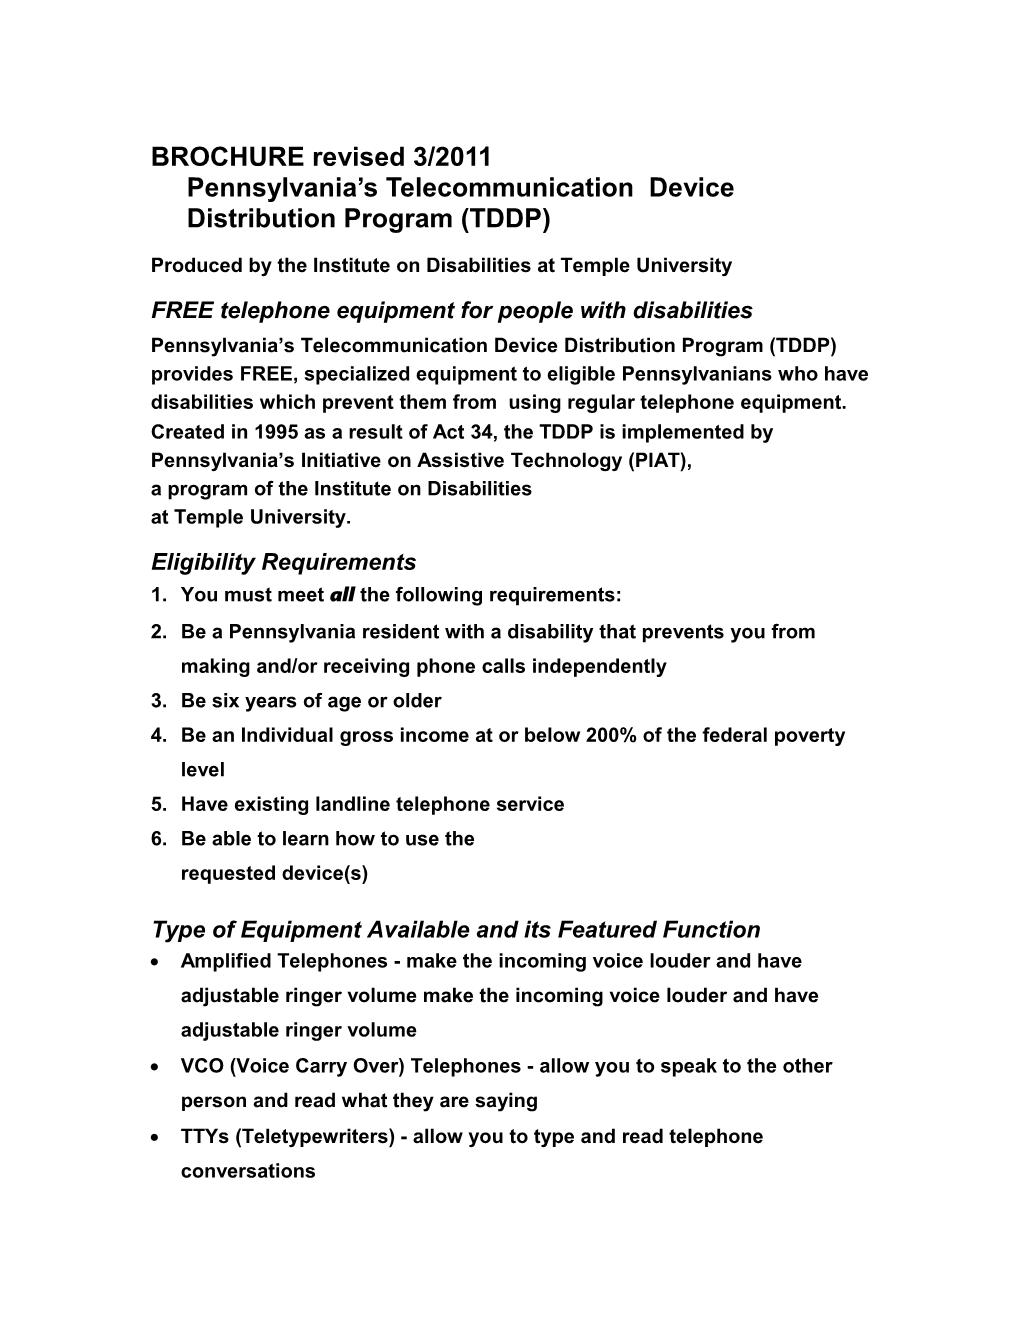 BROCHURE Revised 3/2011Pennsylvania S Telecommunication Device Distribution Program (TDDP)